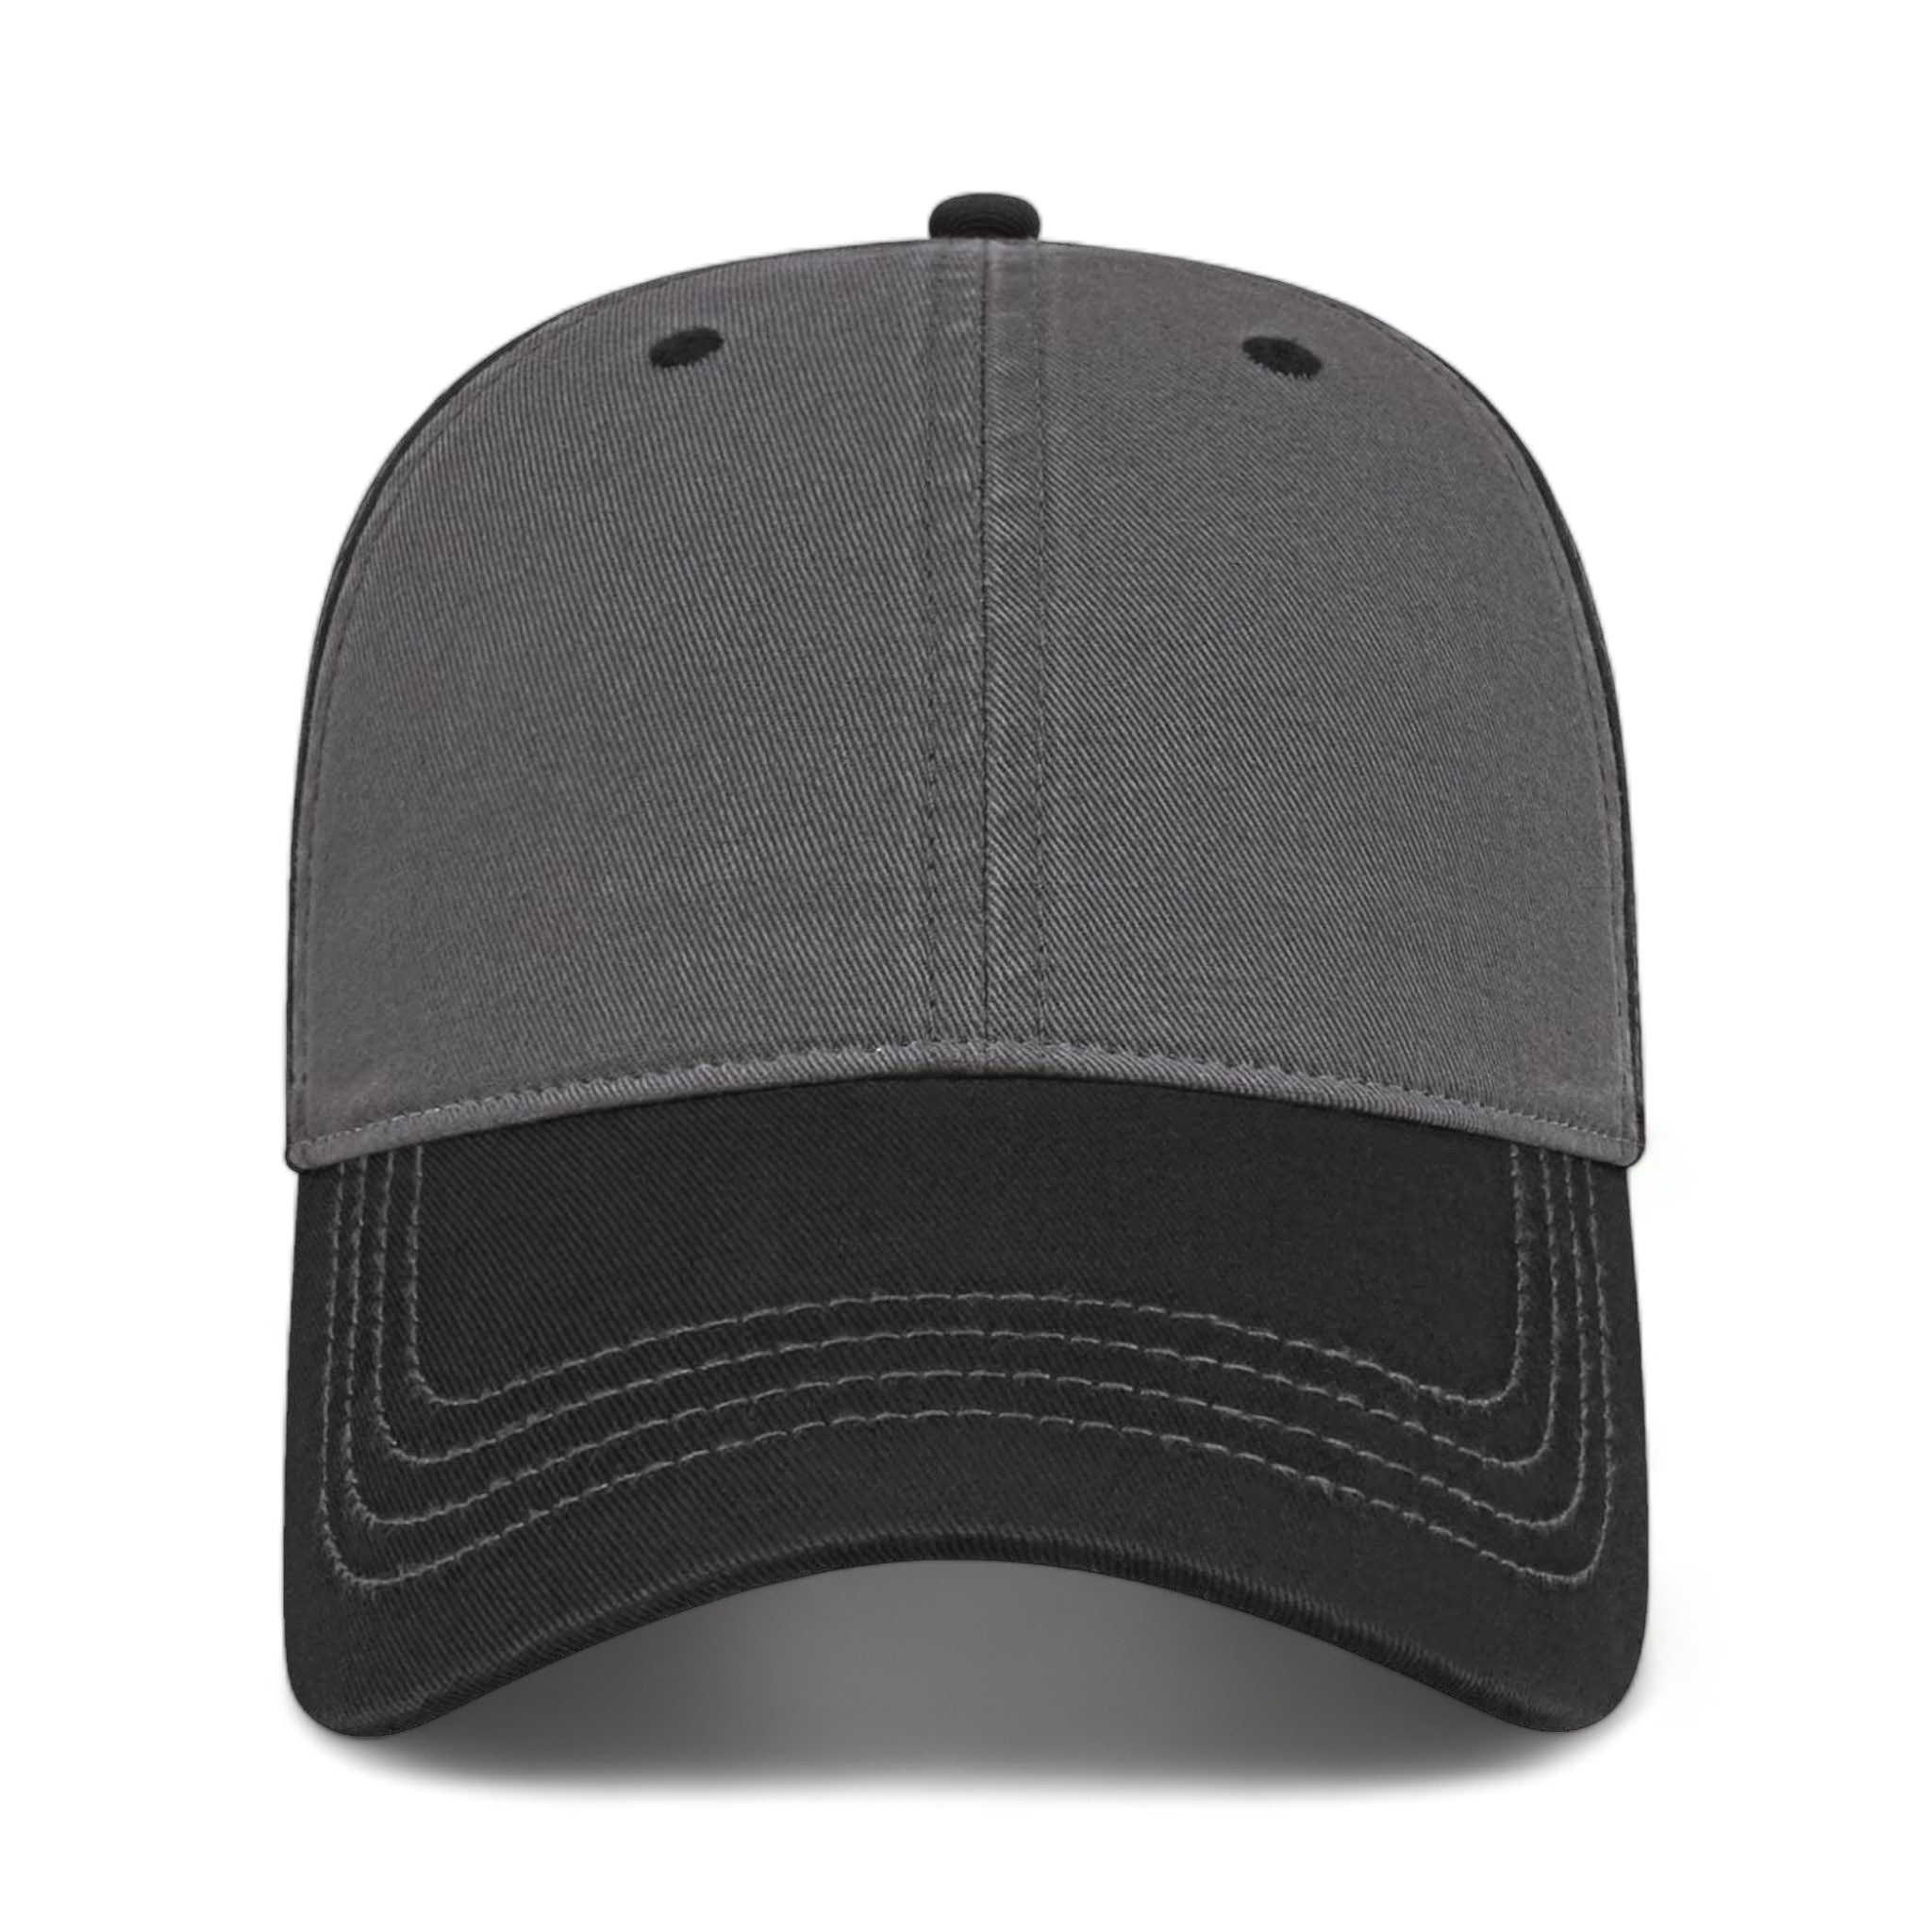 Front view of CAP AMERICA i1002 custom hat in dark grey and black